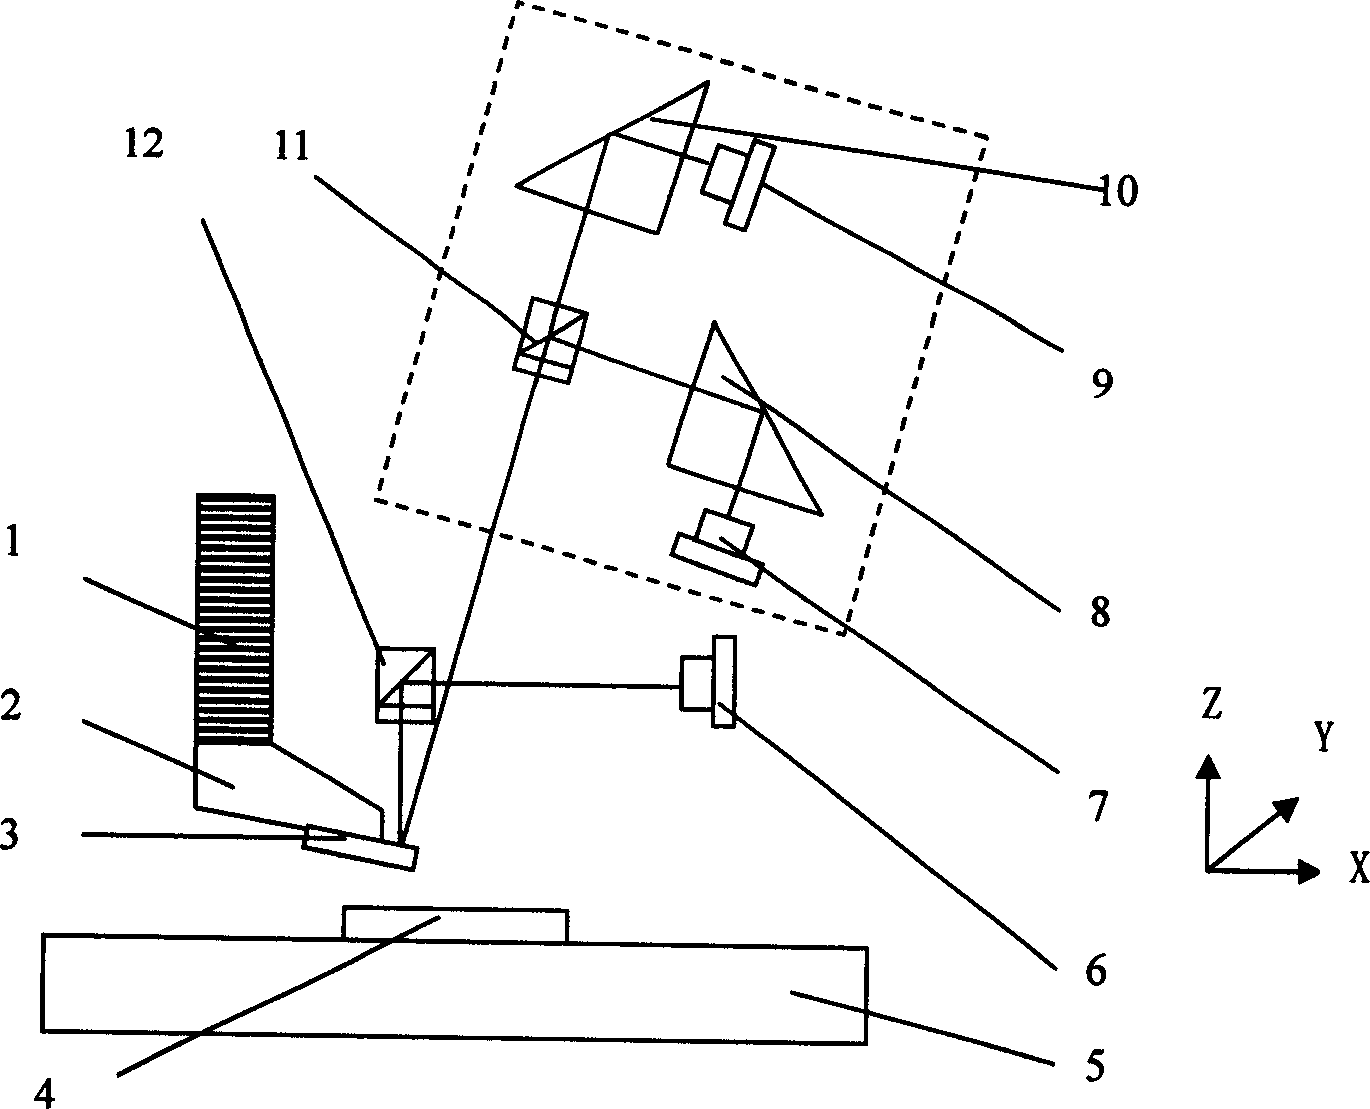 Atomic force microscope measuring device based on angular measurement